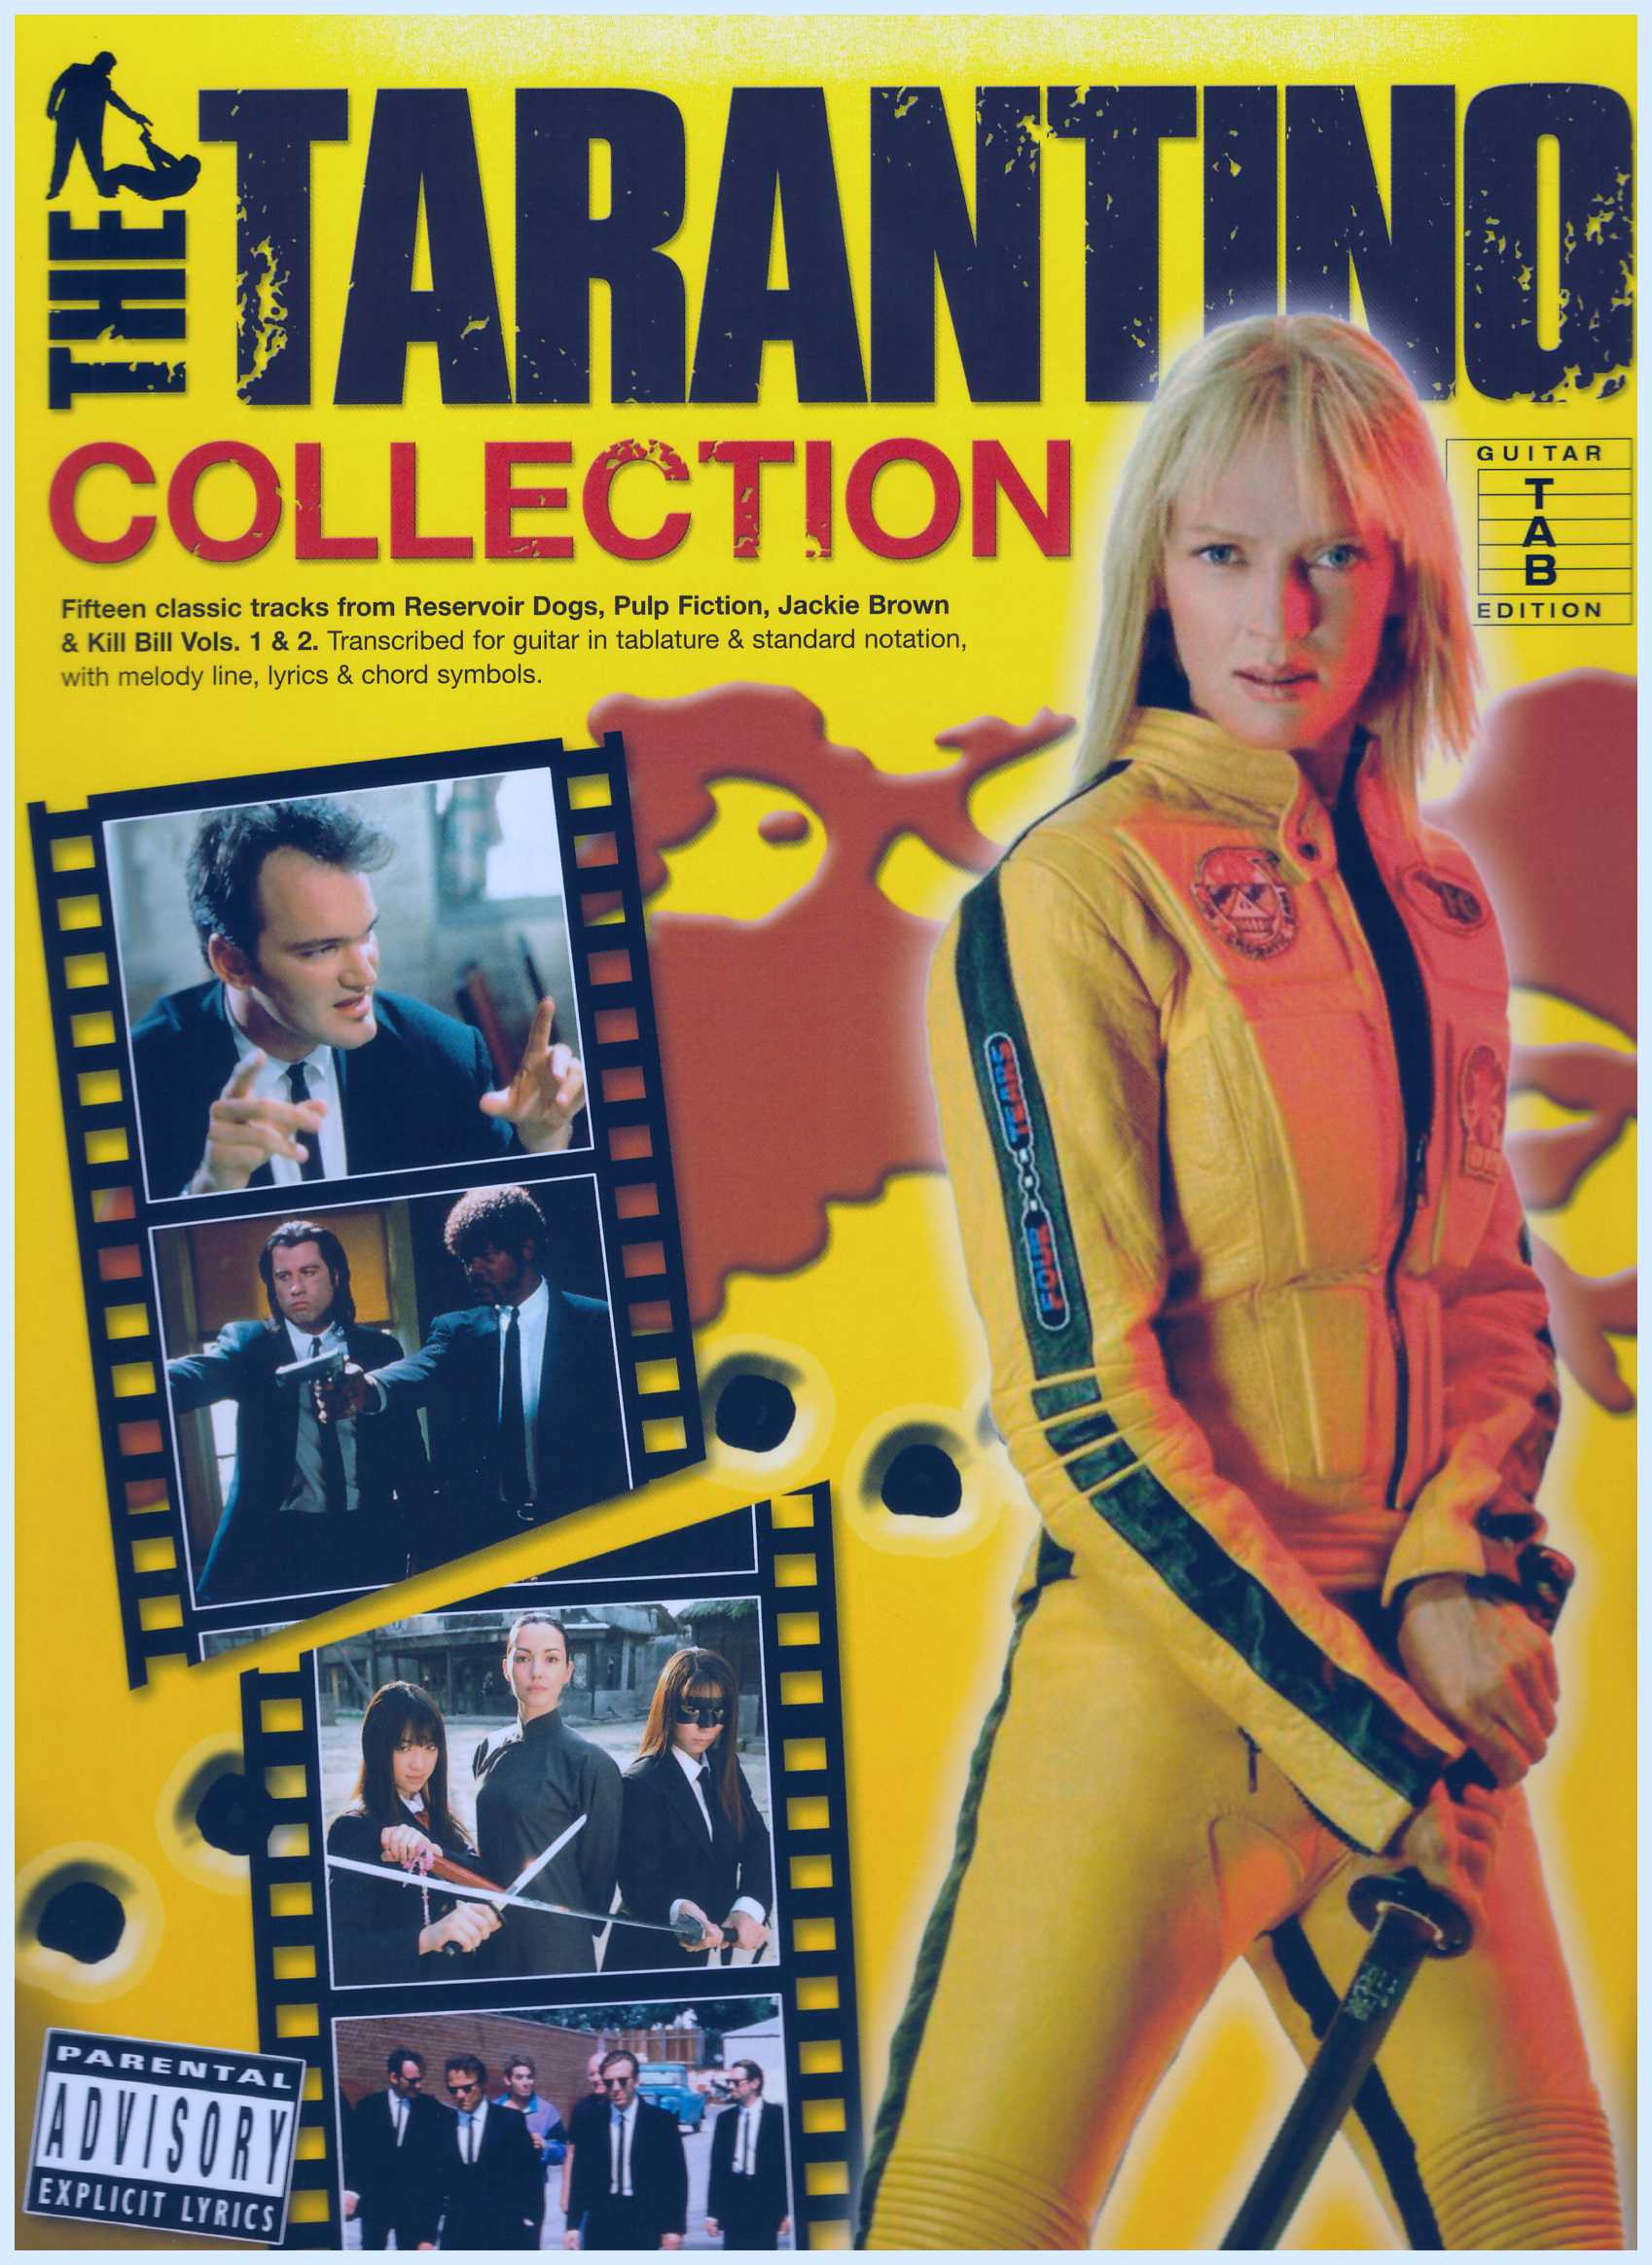 The Tarantino Collection /  Guitar Tab Edition / Vocal Book / Voice Book / Guitar Book / Gitar Book